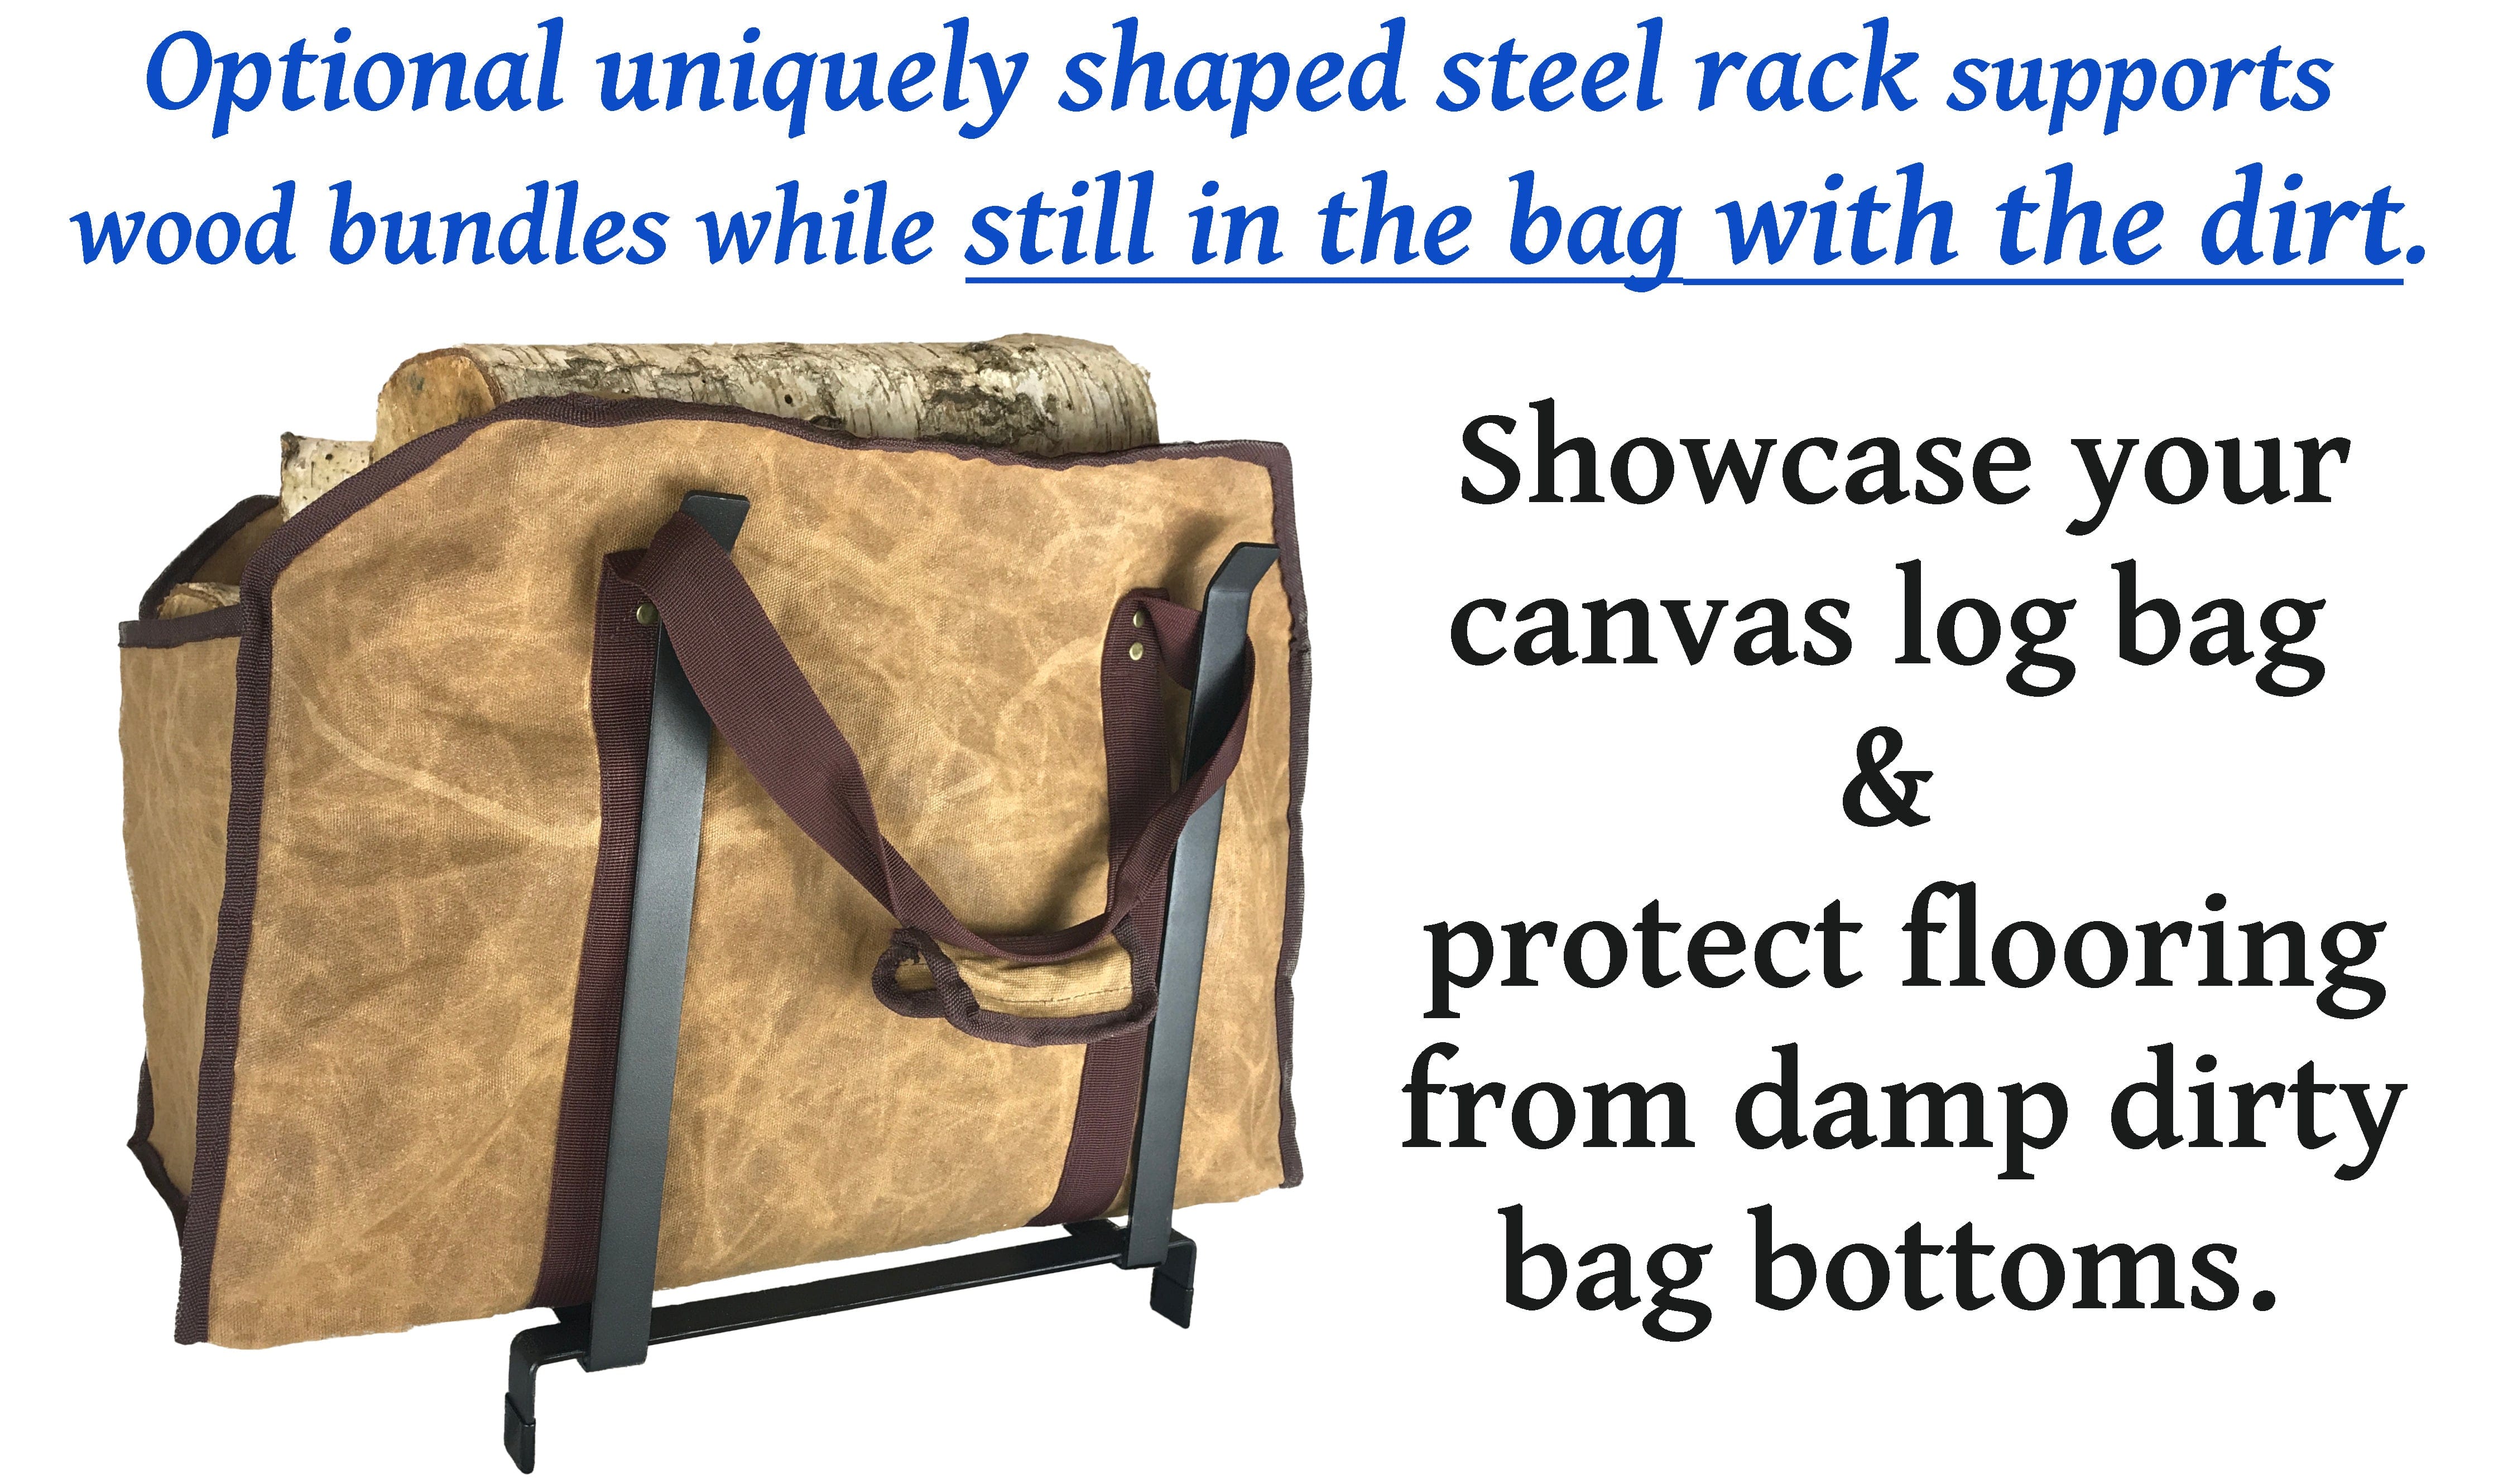 Firewood Carrier Bag